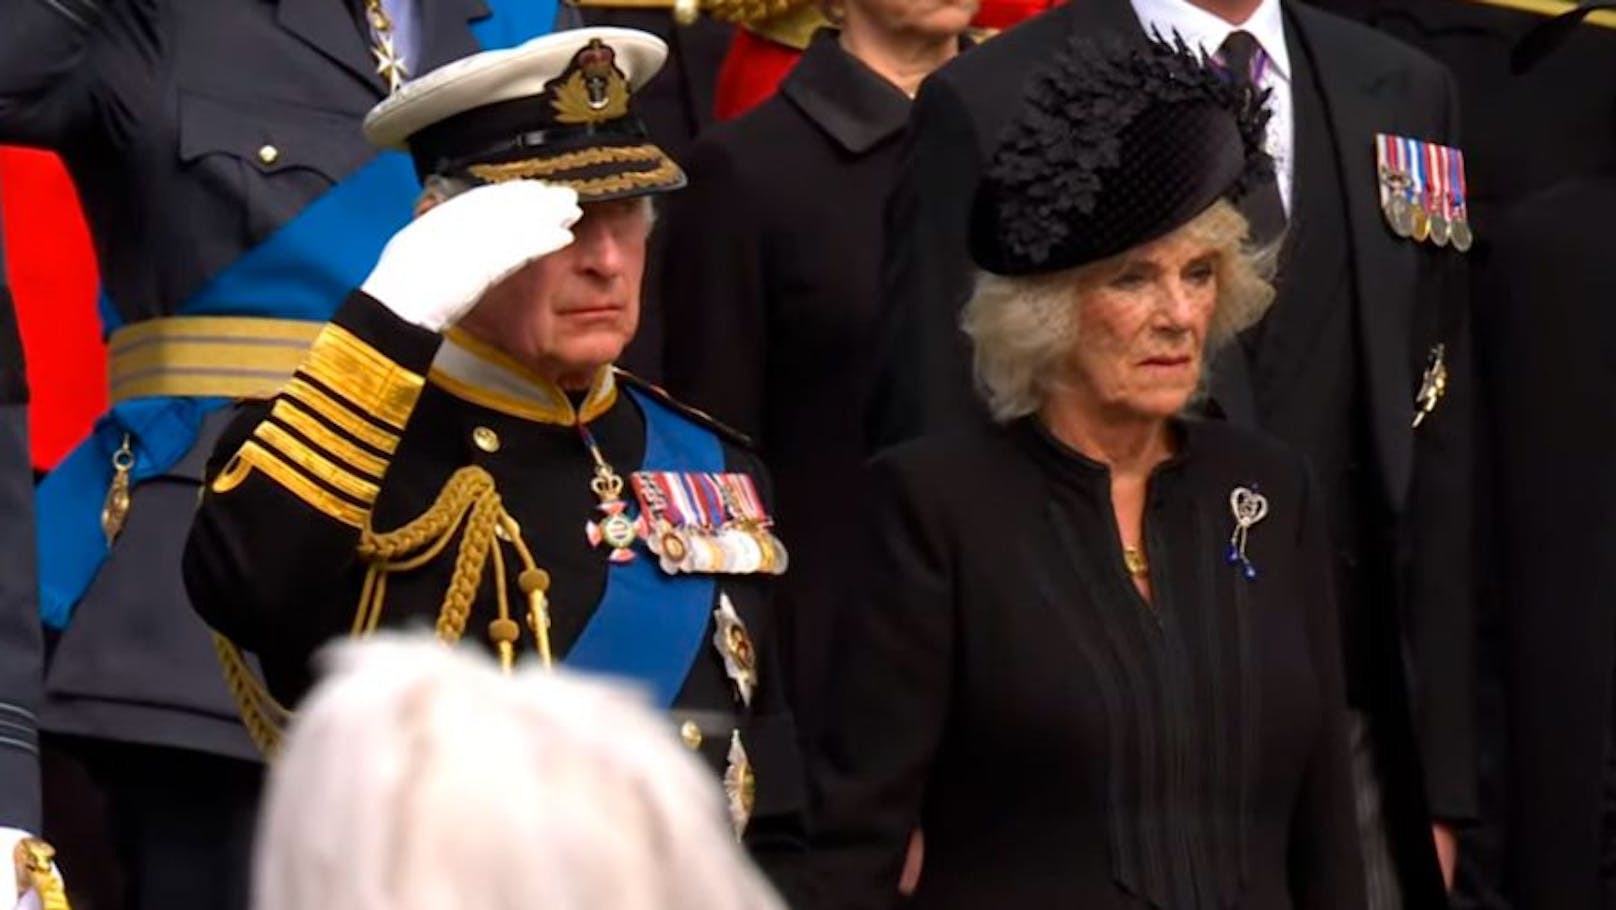 König Charles III. salutierte vor dem Sarg seiner verstorbenen Mutter Queen Elizabeth II. am Wellington Arch in London. Queen Consort Camillas Blick ist wie versteinert.